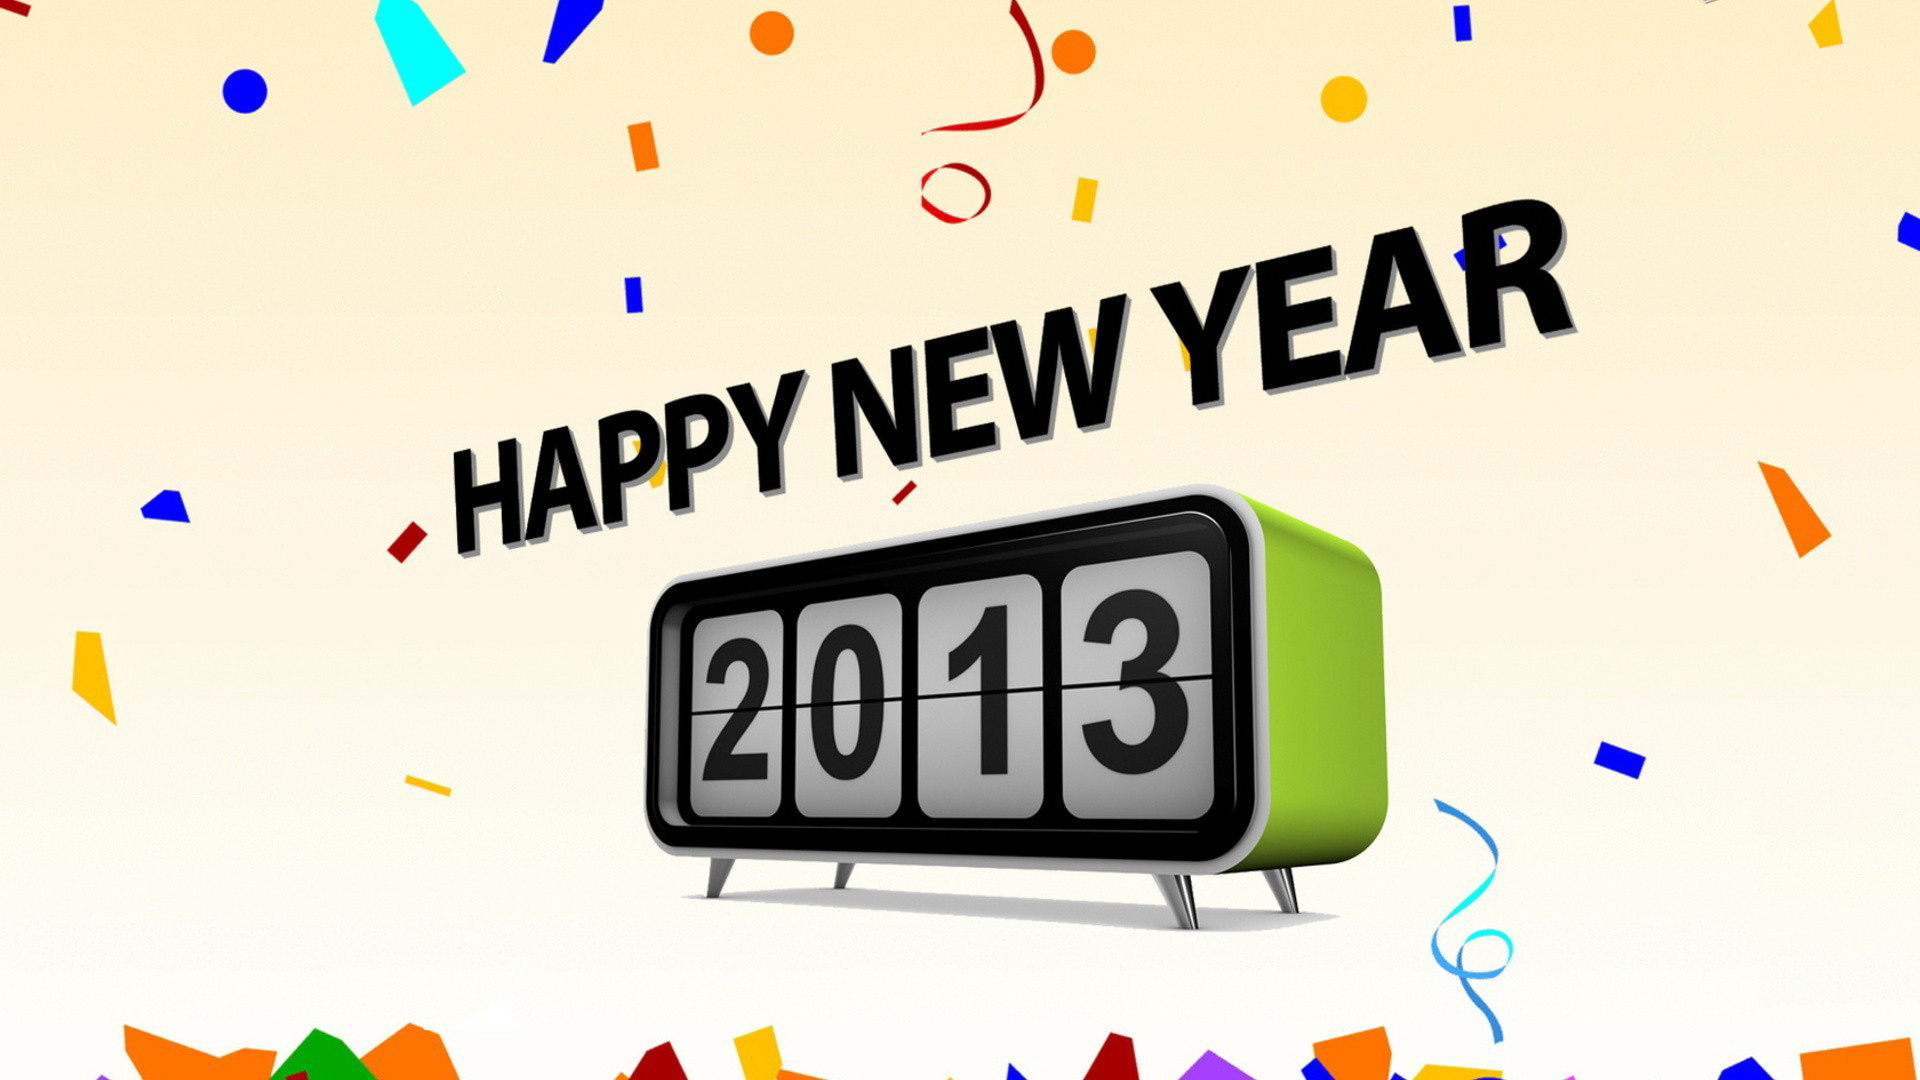  , happy new year, , new year, 2013